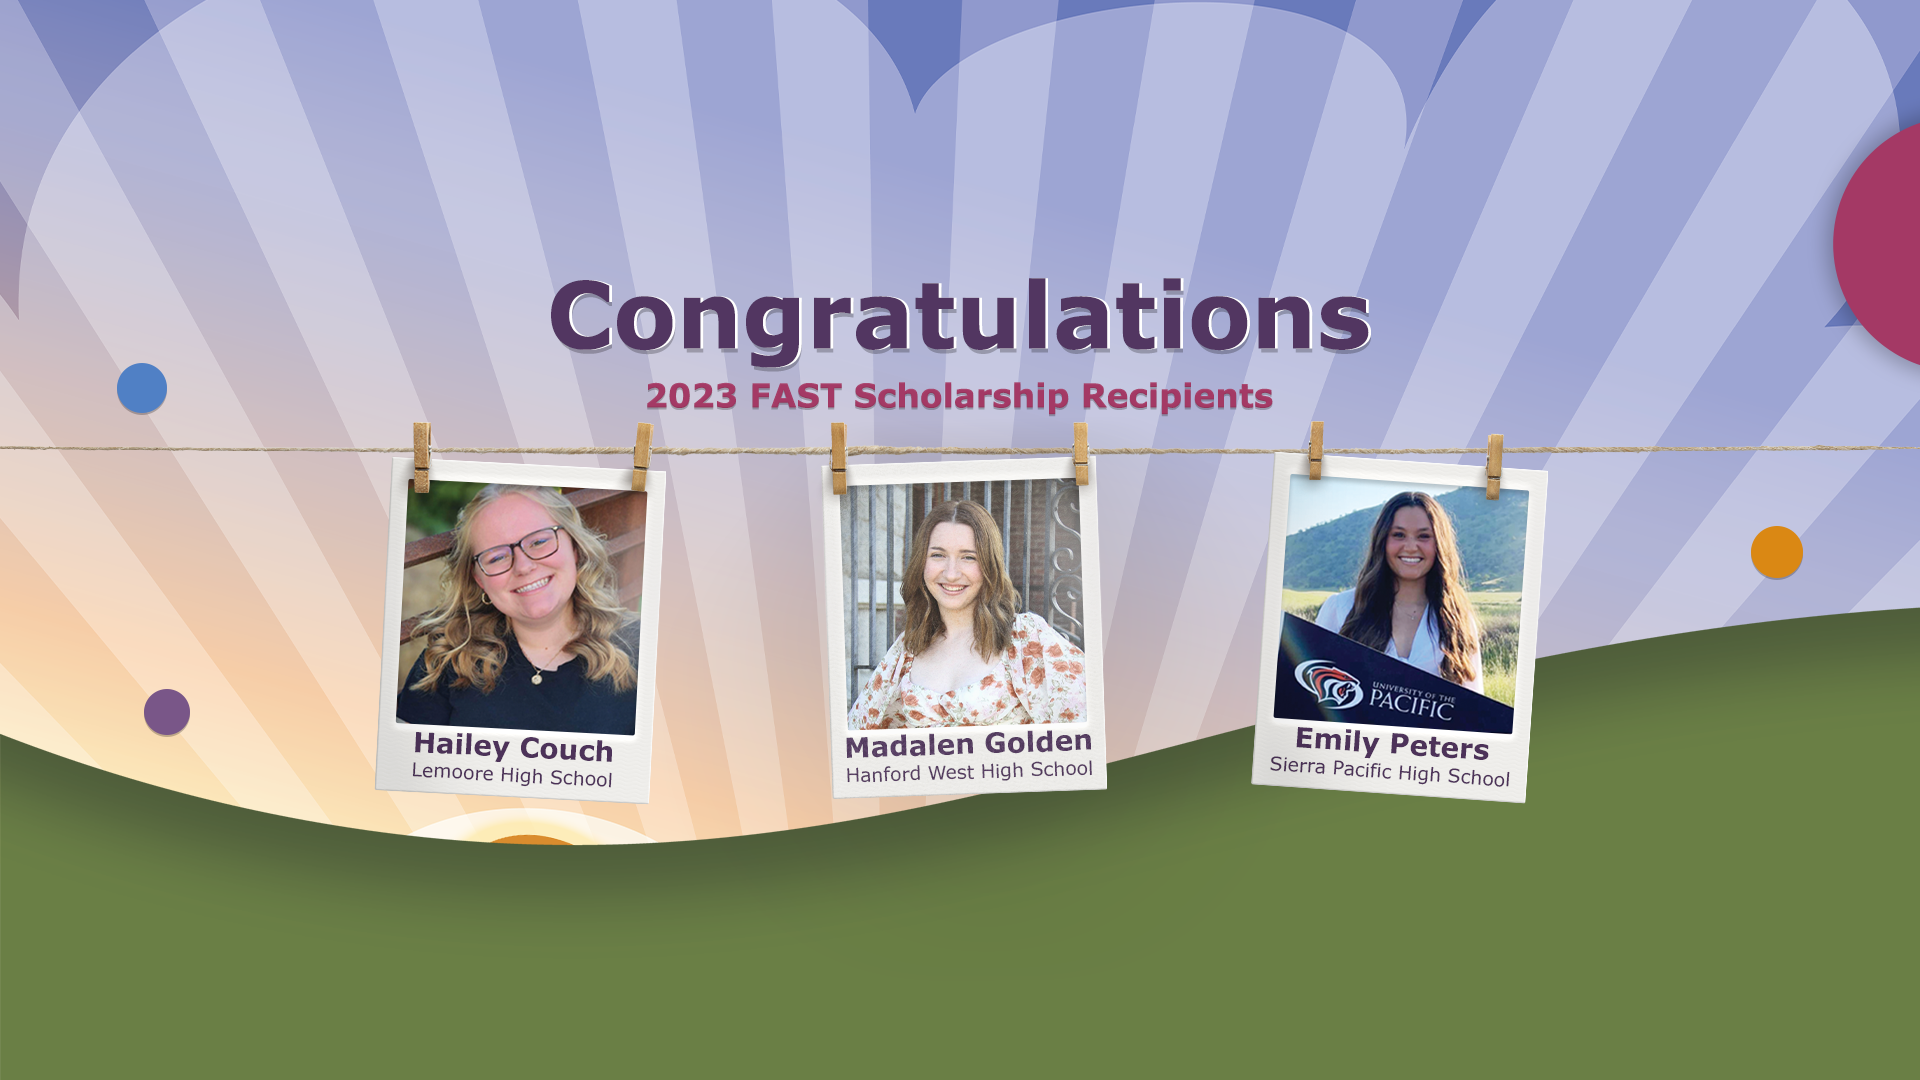 Congratulations, 2023 Fast Scholarship Recipients